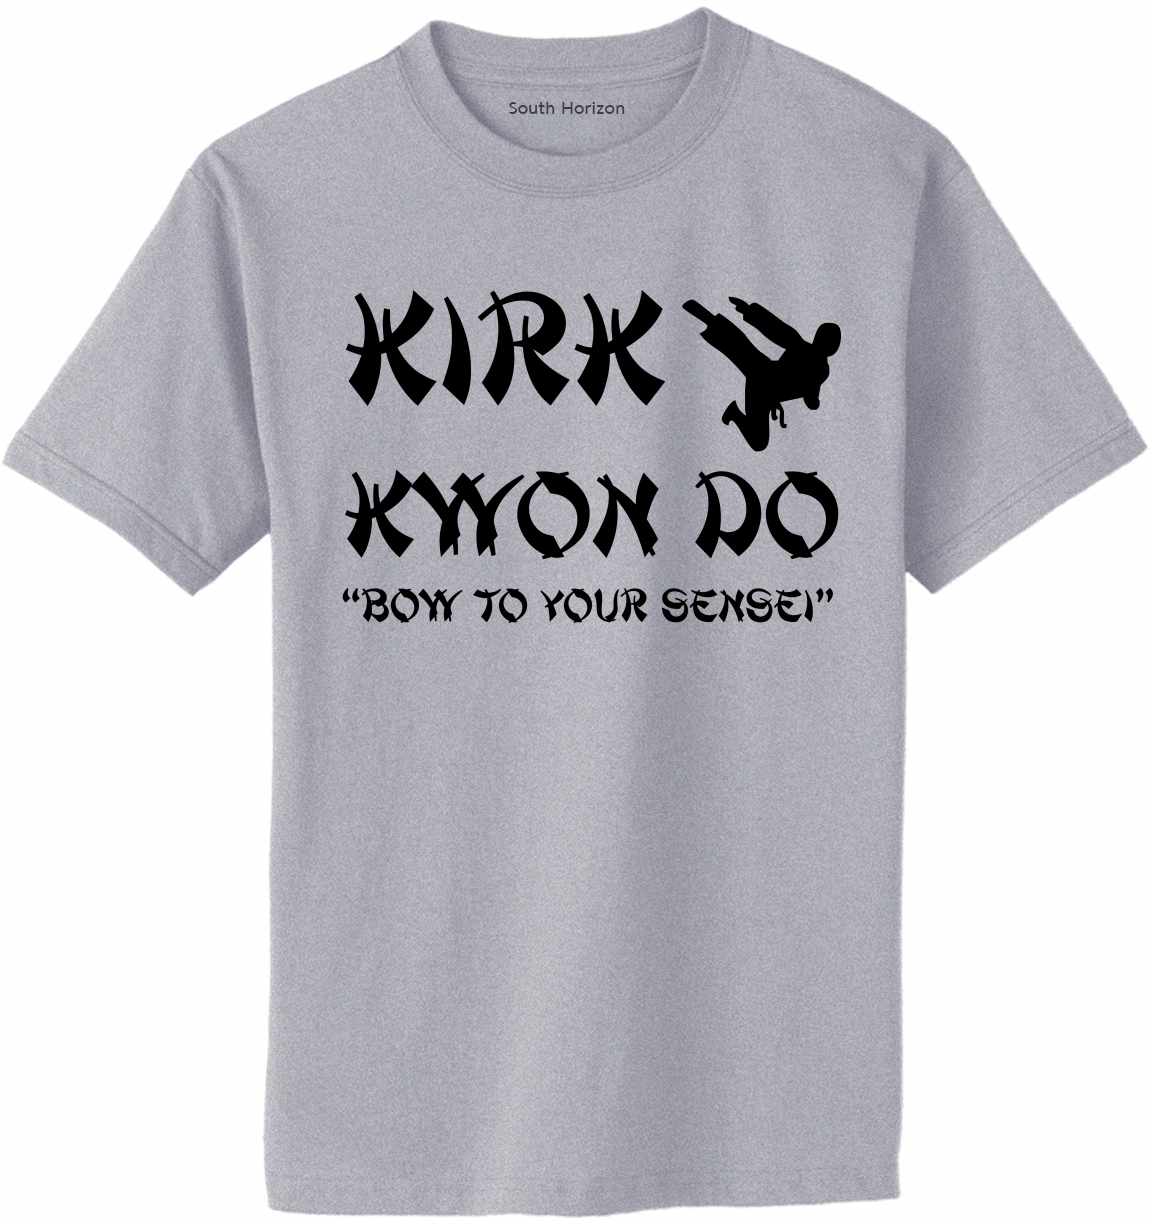 Kirk Kwon Do Adult T-Shirt (#1080-1)